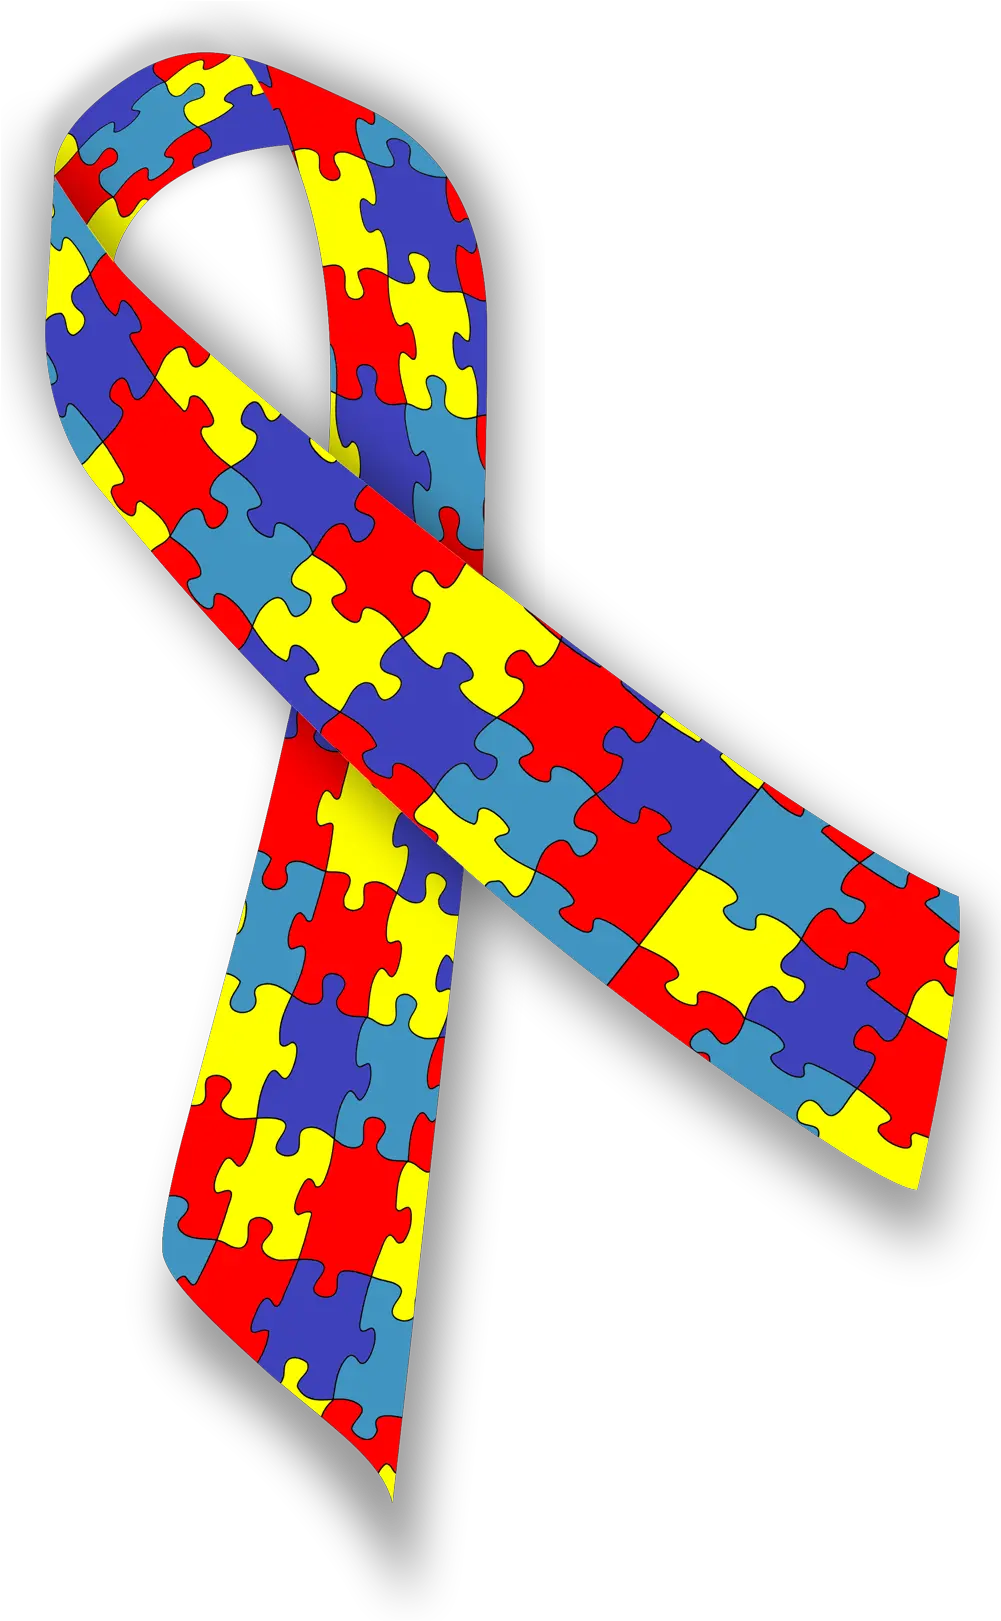 Fileautism Awareness Ribbonpng Wikimedia Commons Autism Awareness Ribbon Png Ribbon Png